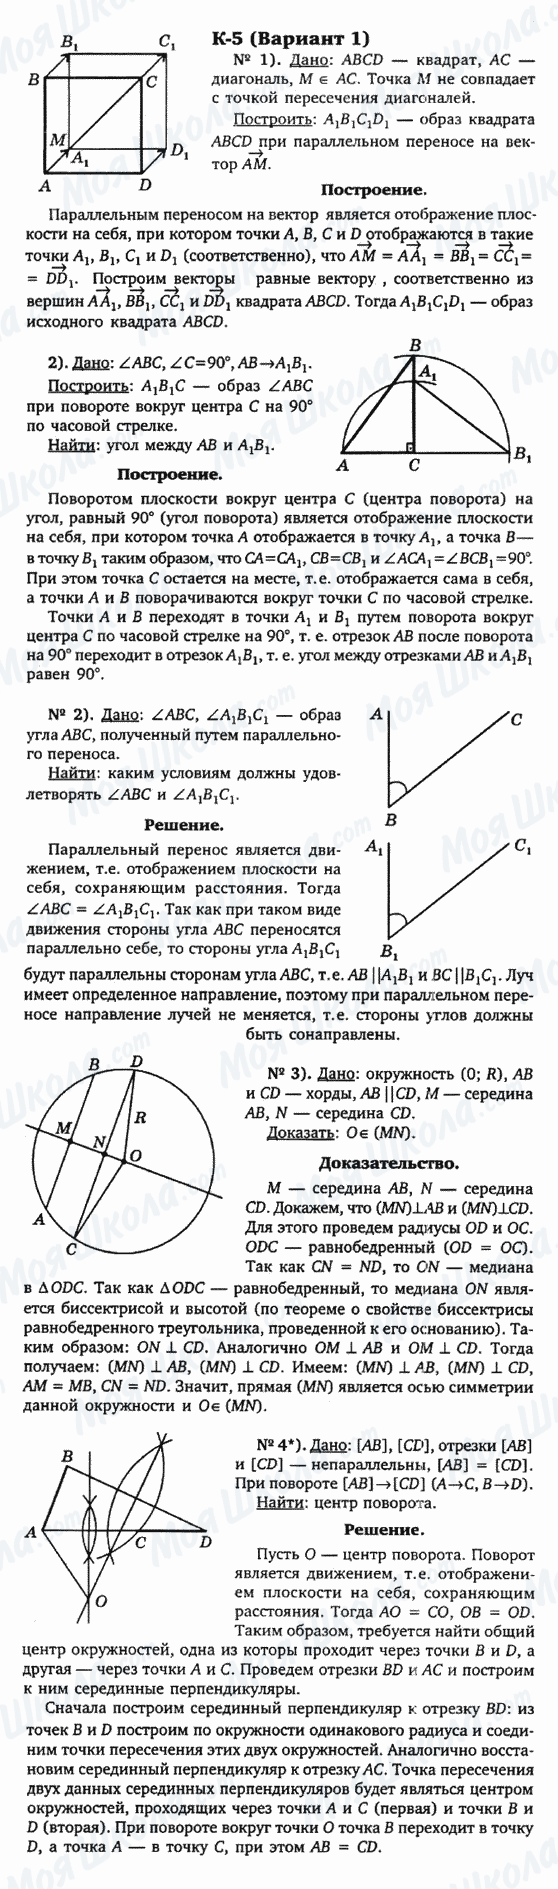 ГДЗ Геометрия 9 класс страница к-5(вариант 1)